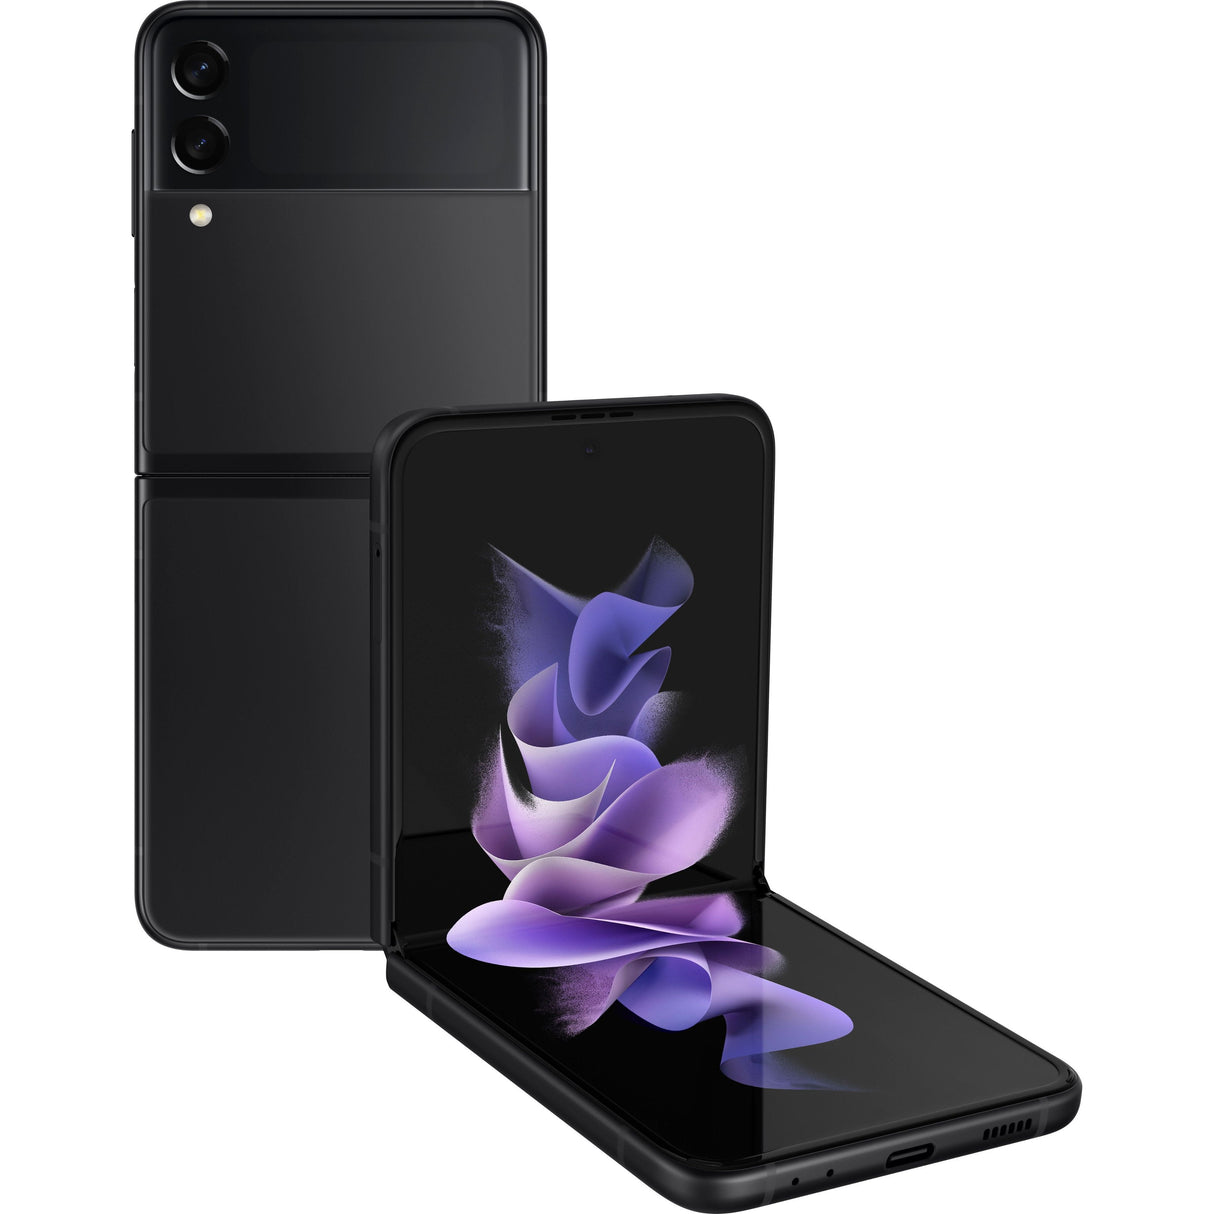 Samsung Galaxy Z Flip3 5G - 256GB - Phantom Black - AT&T